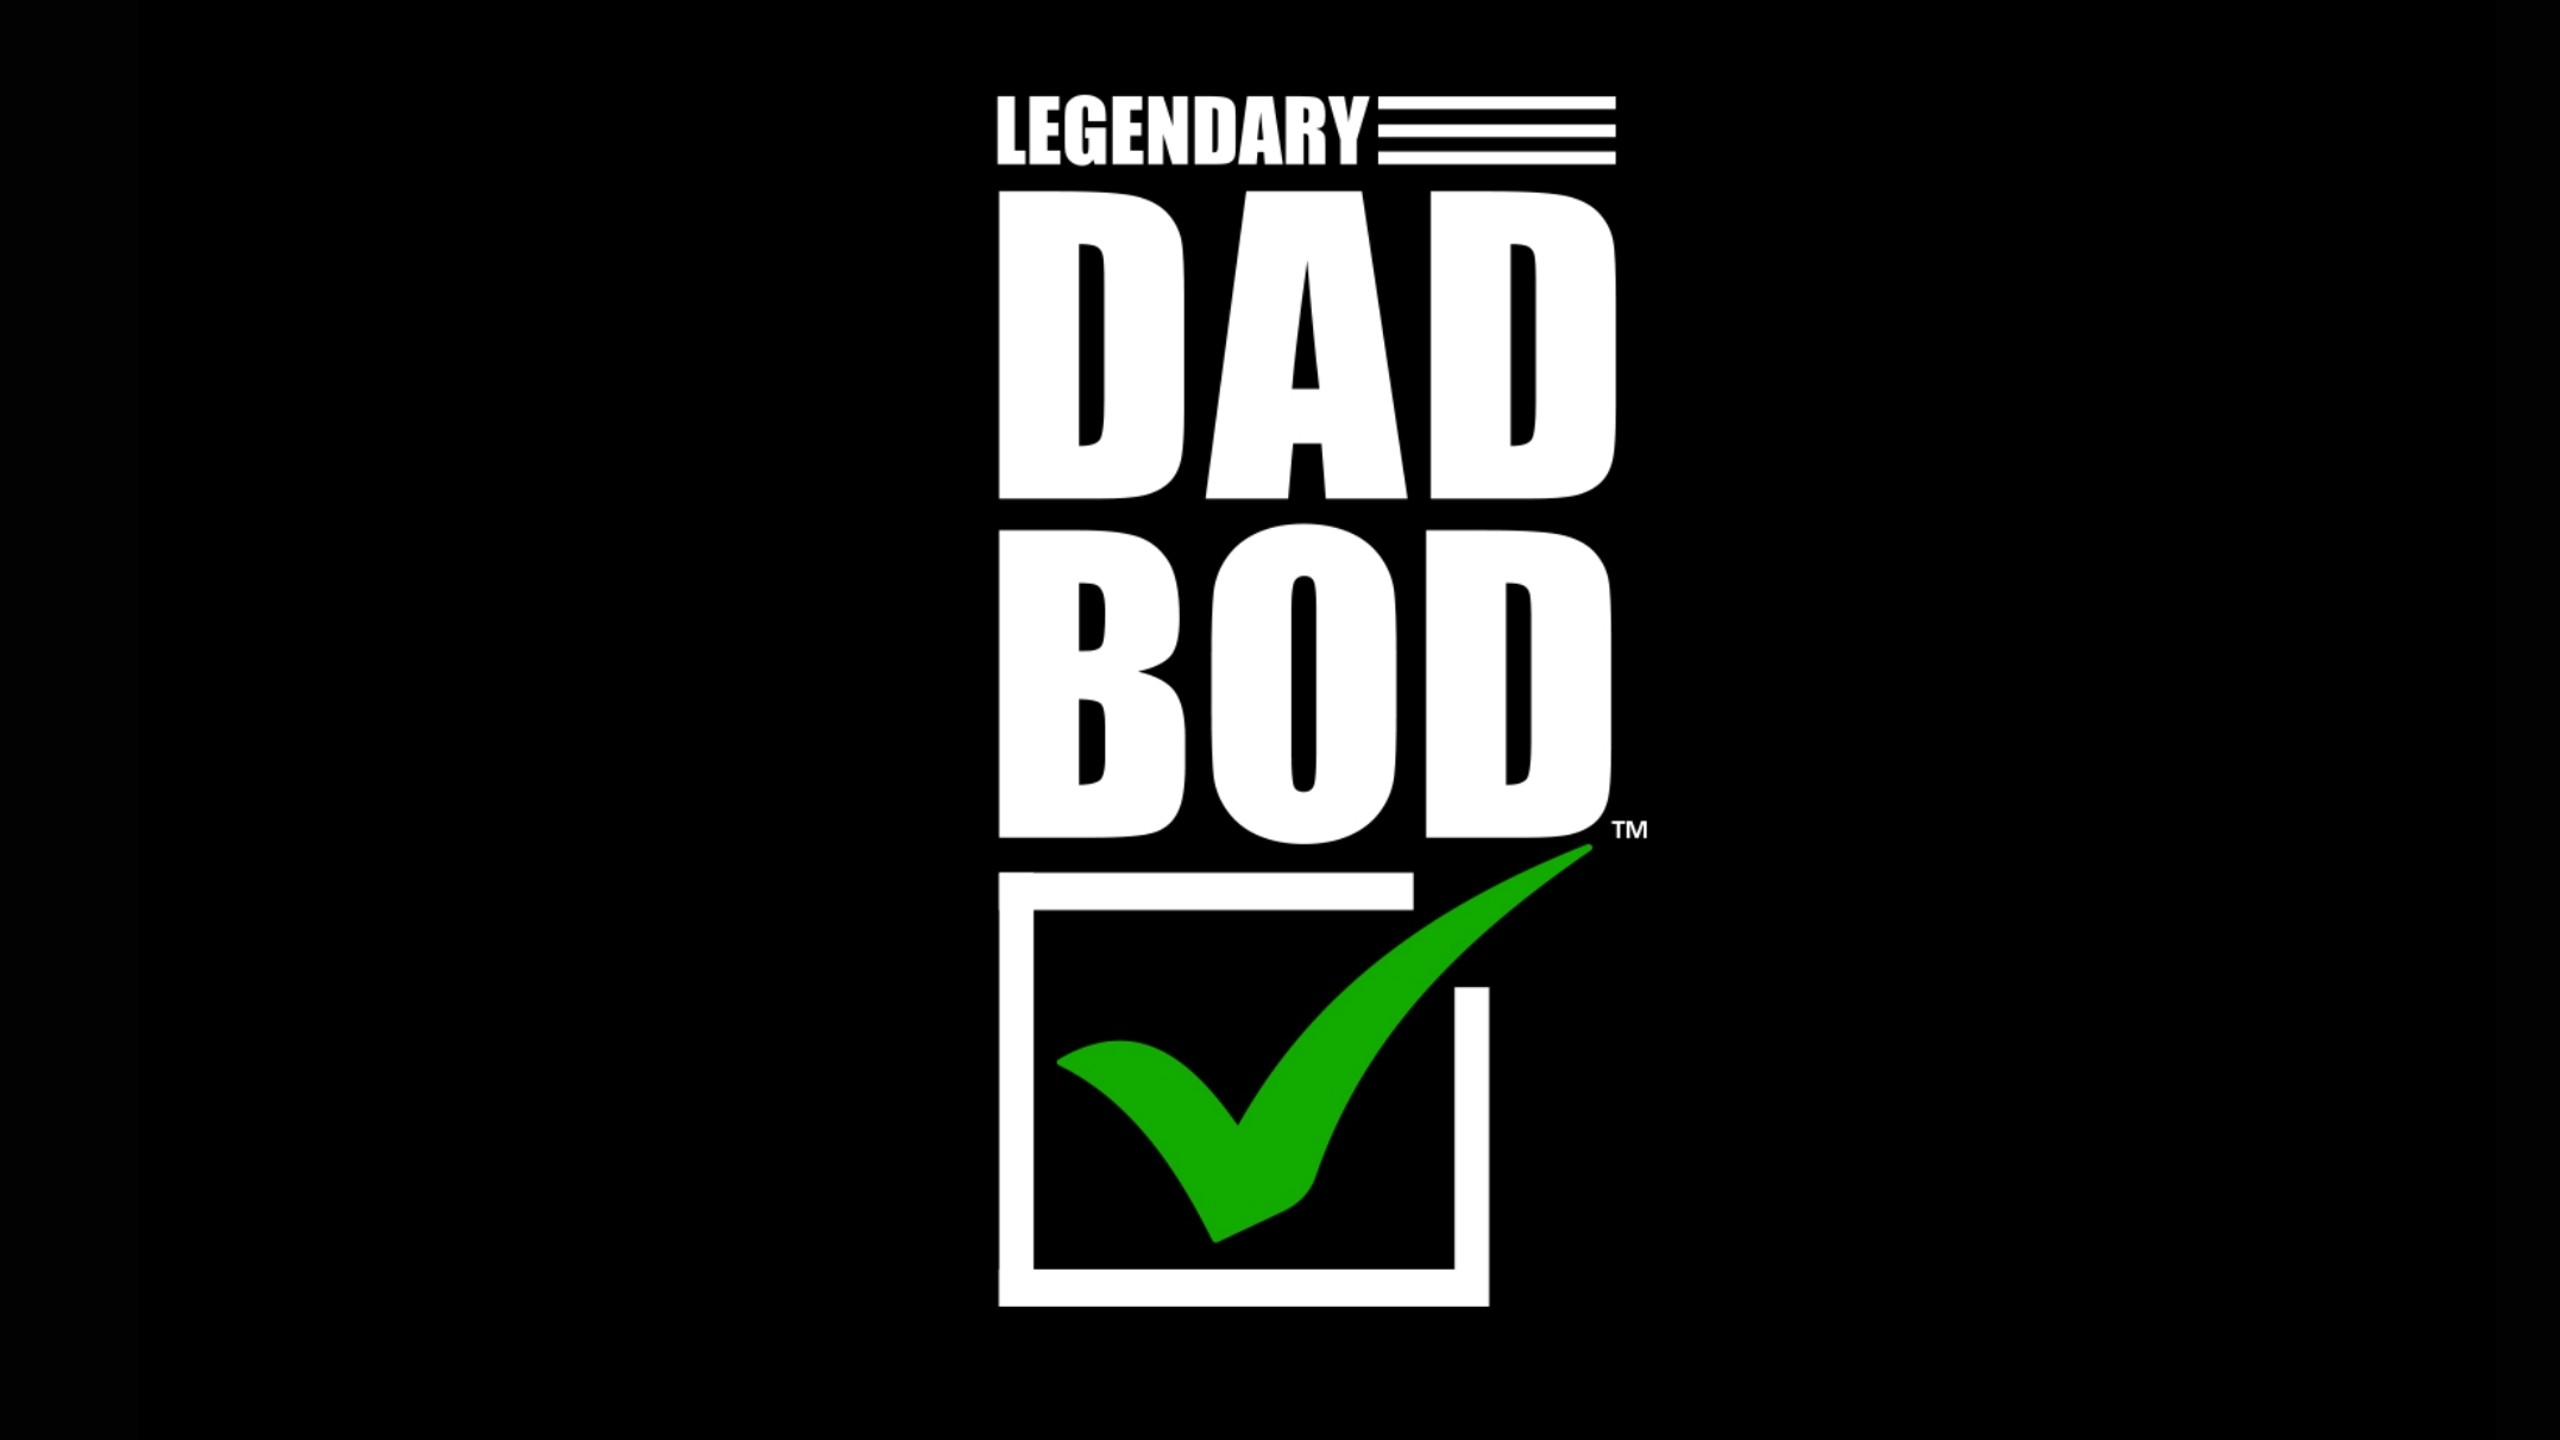 Legendary Dad Bod Contest Celebrates Dads and Raises Money for Pediatric Cancer